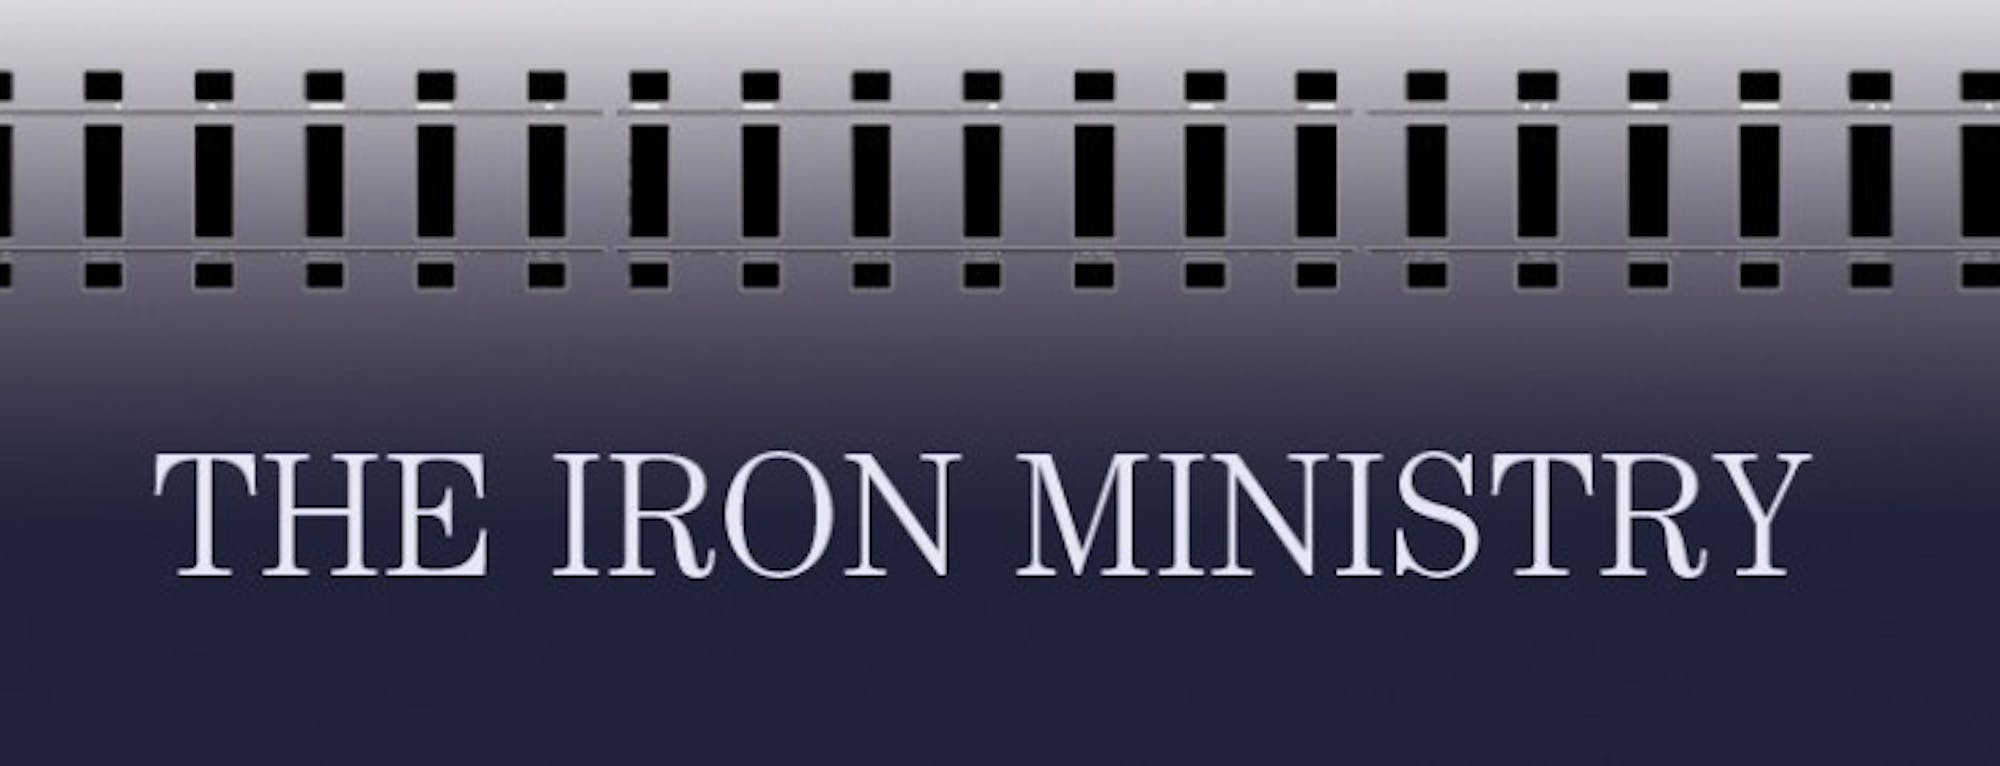 iron-ministry-web-